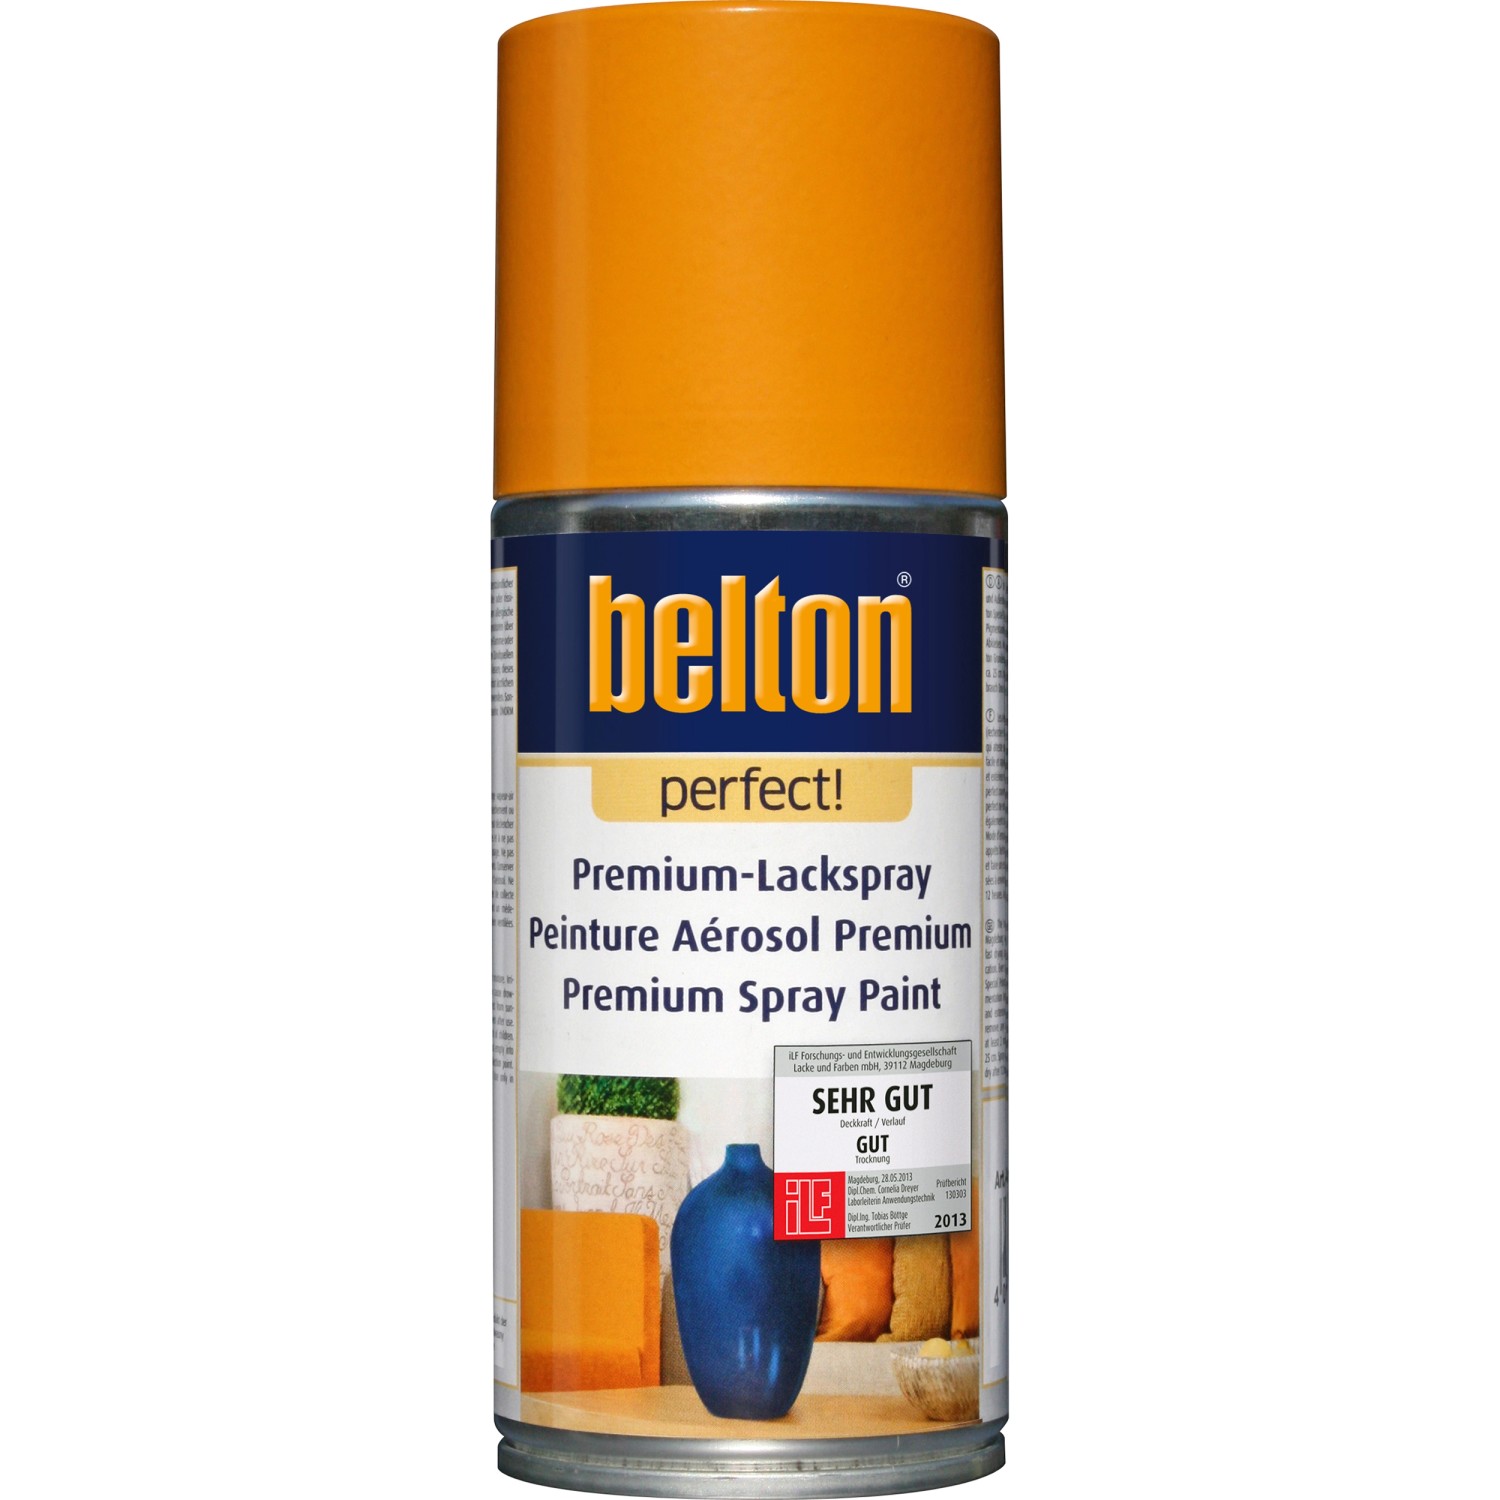 Belton Perfect Premium-Lackspray Orange seidenmatt 150 ml von belton